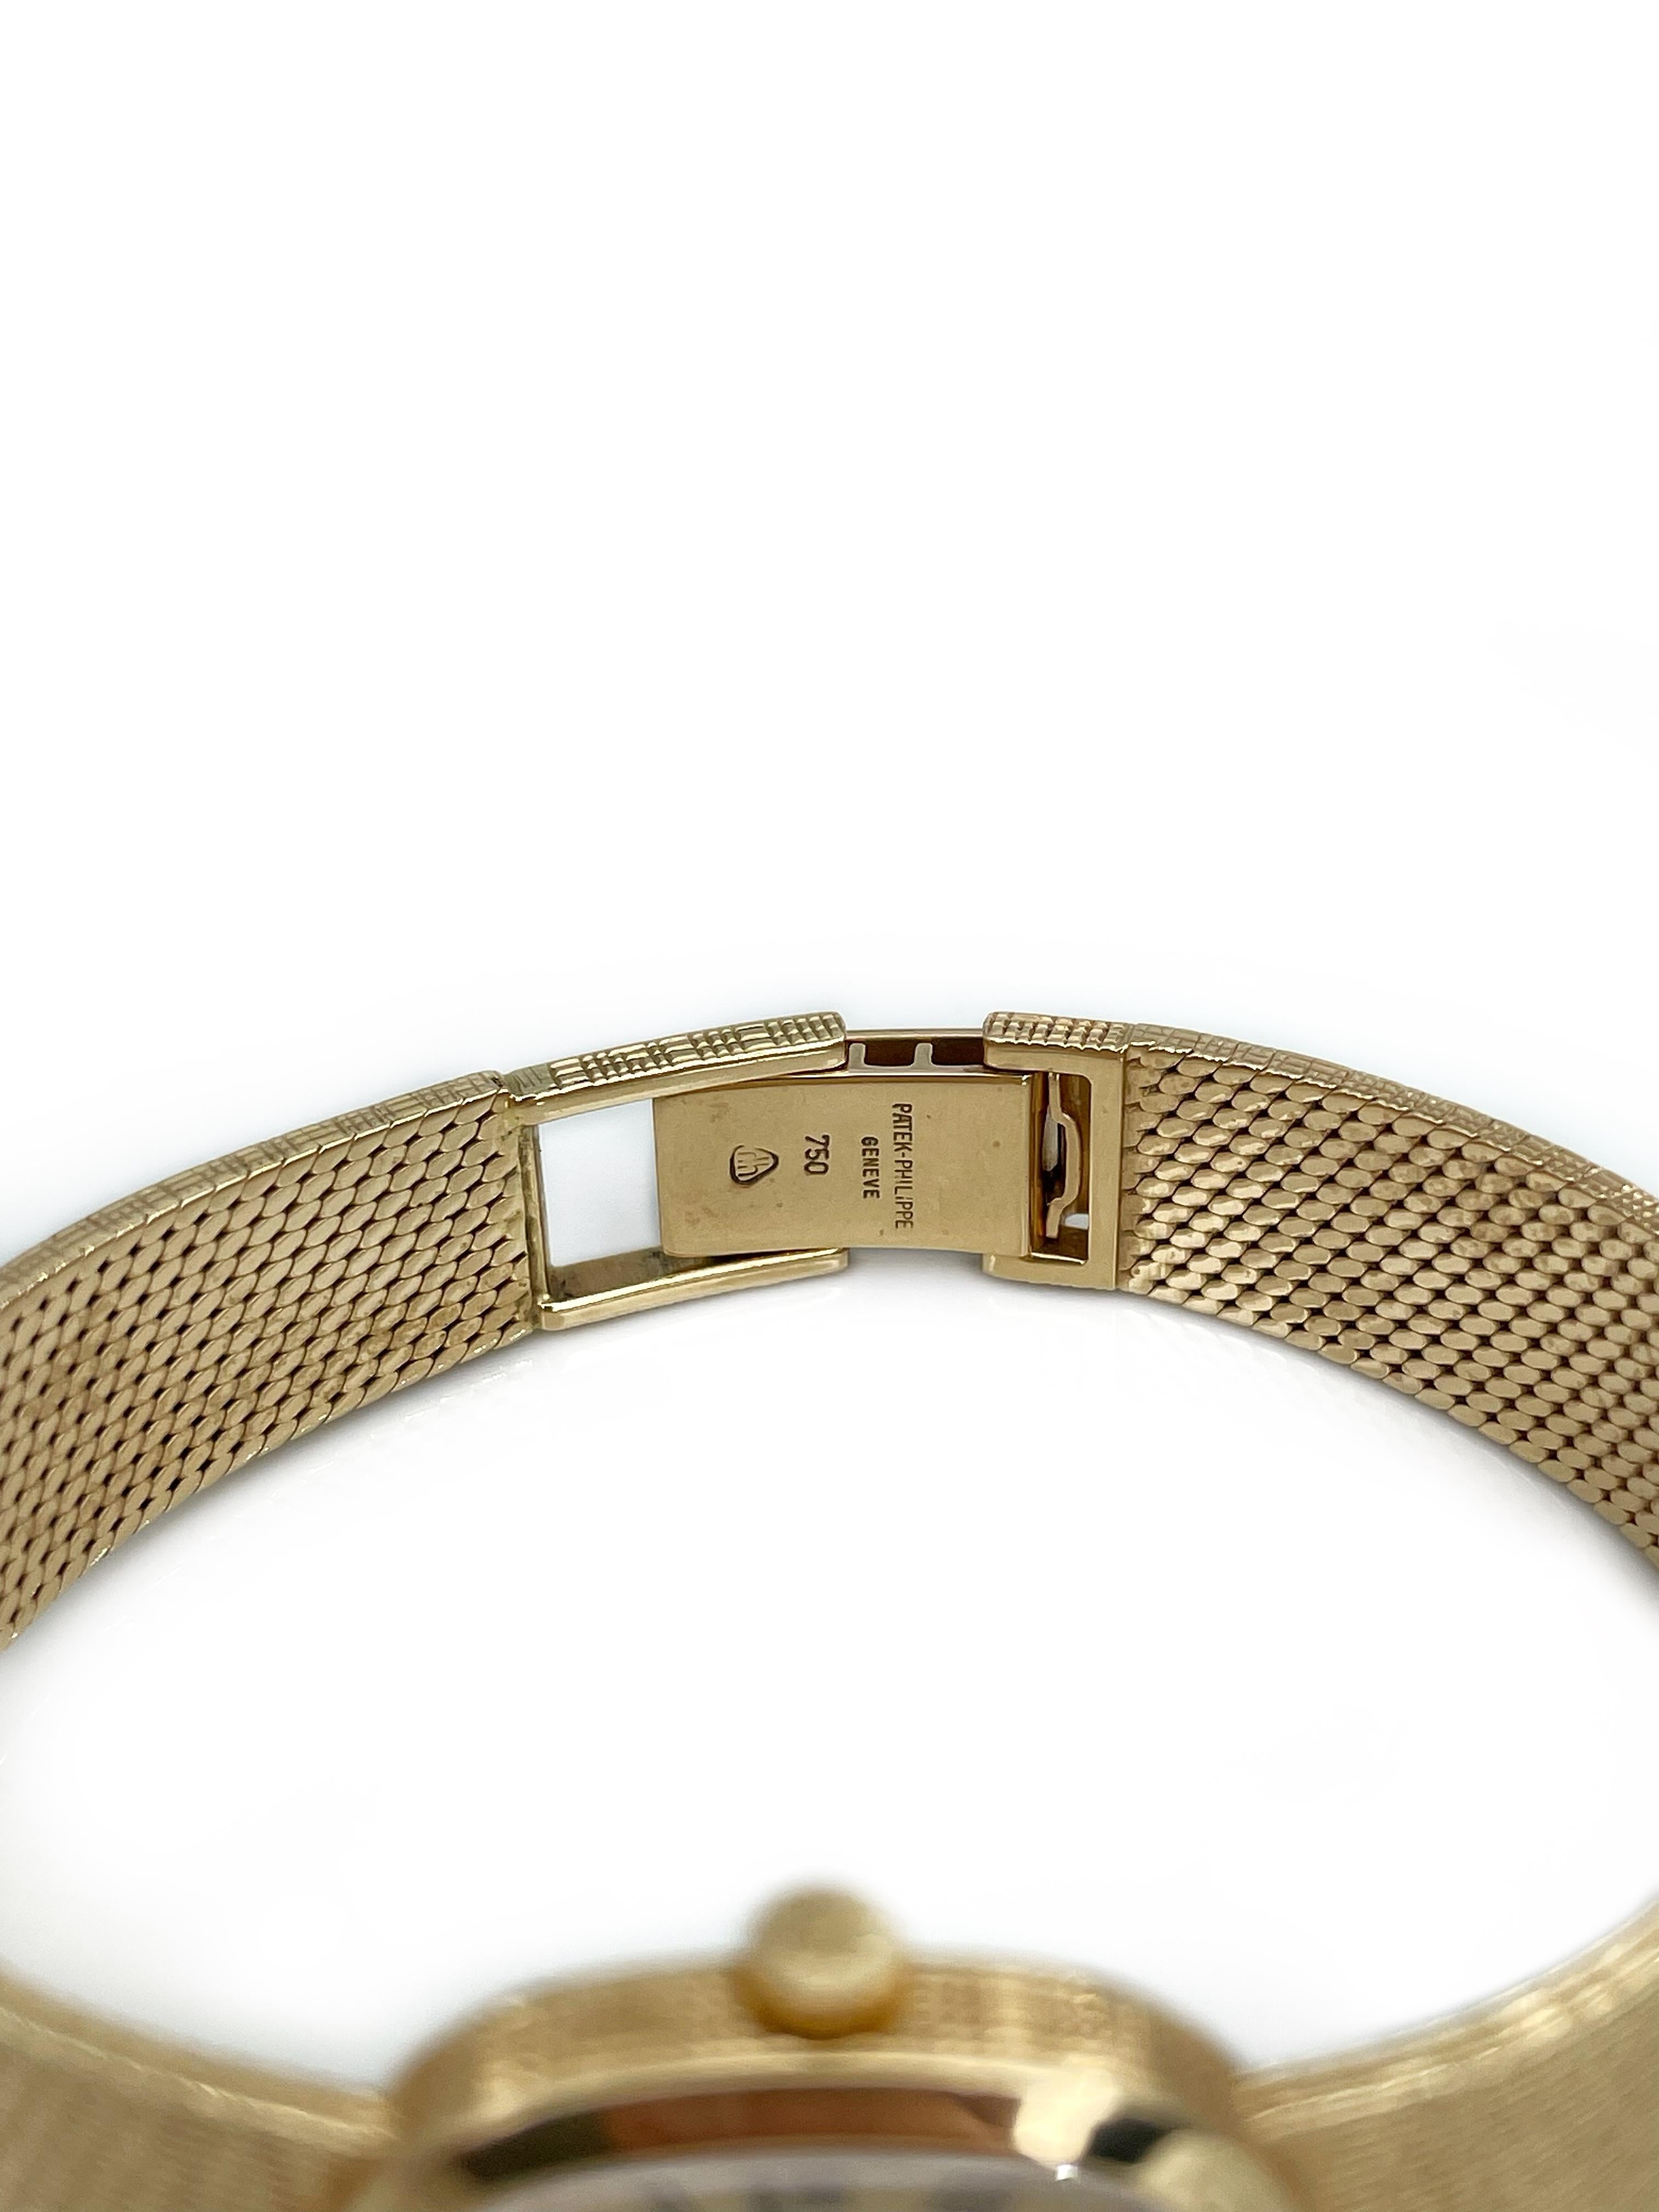 1970s Patek Philippe 18 Karat Yellow Gold Model 4132/1 Wrist Watch 2